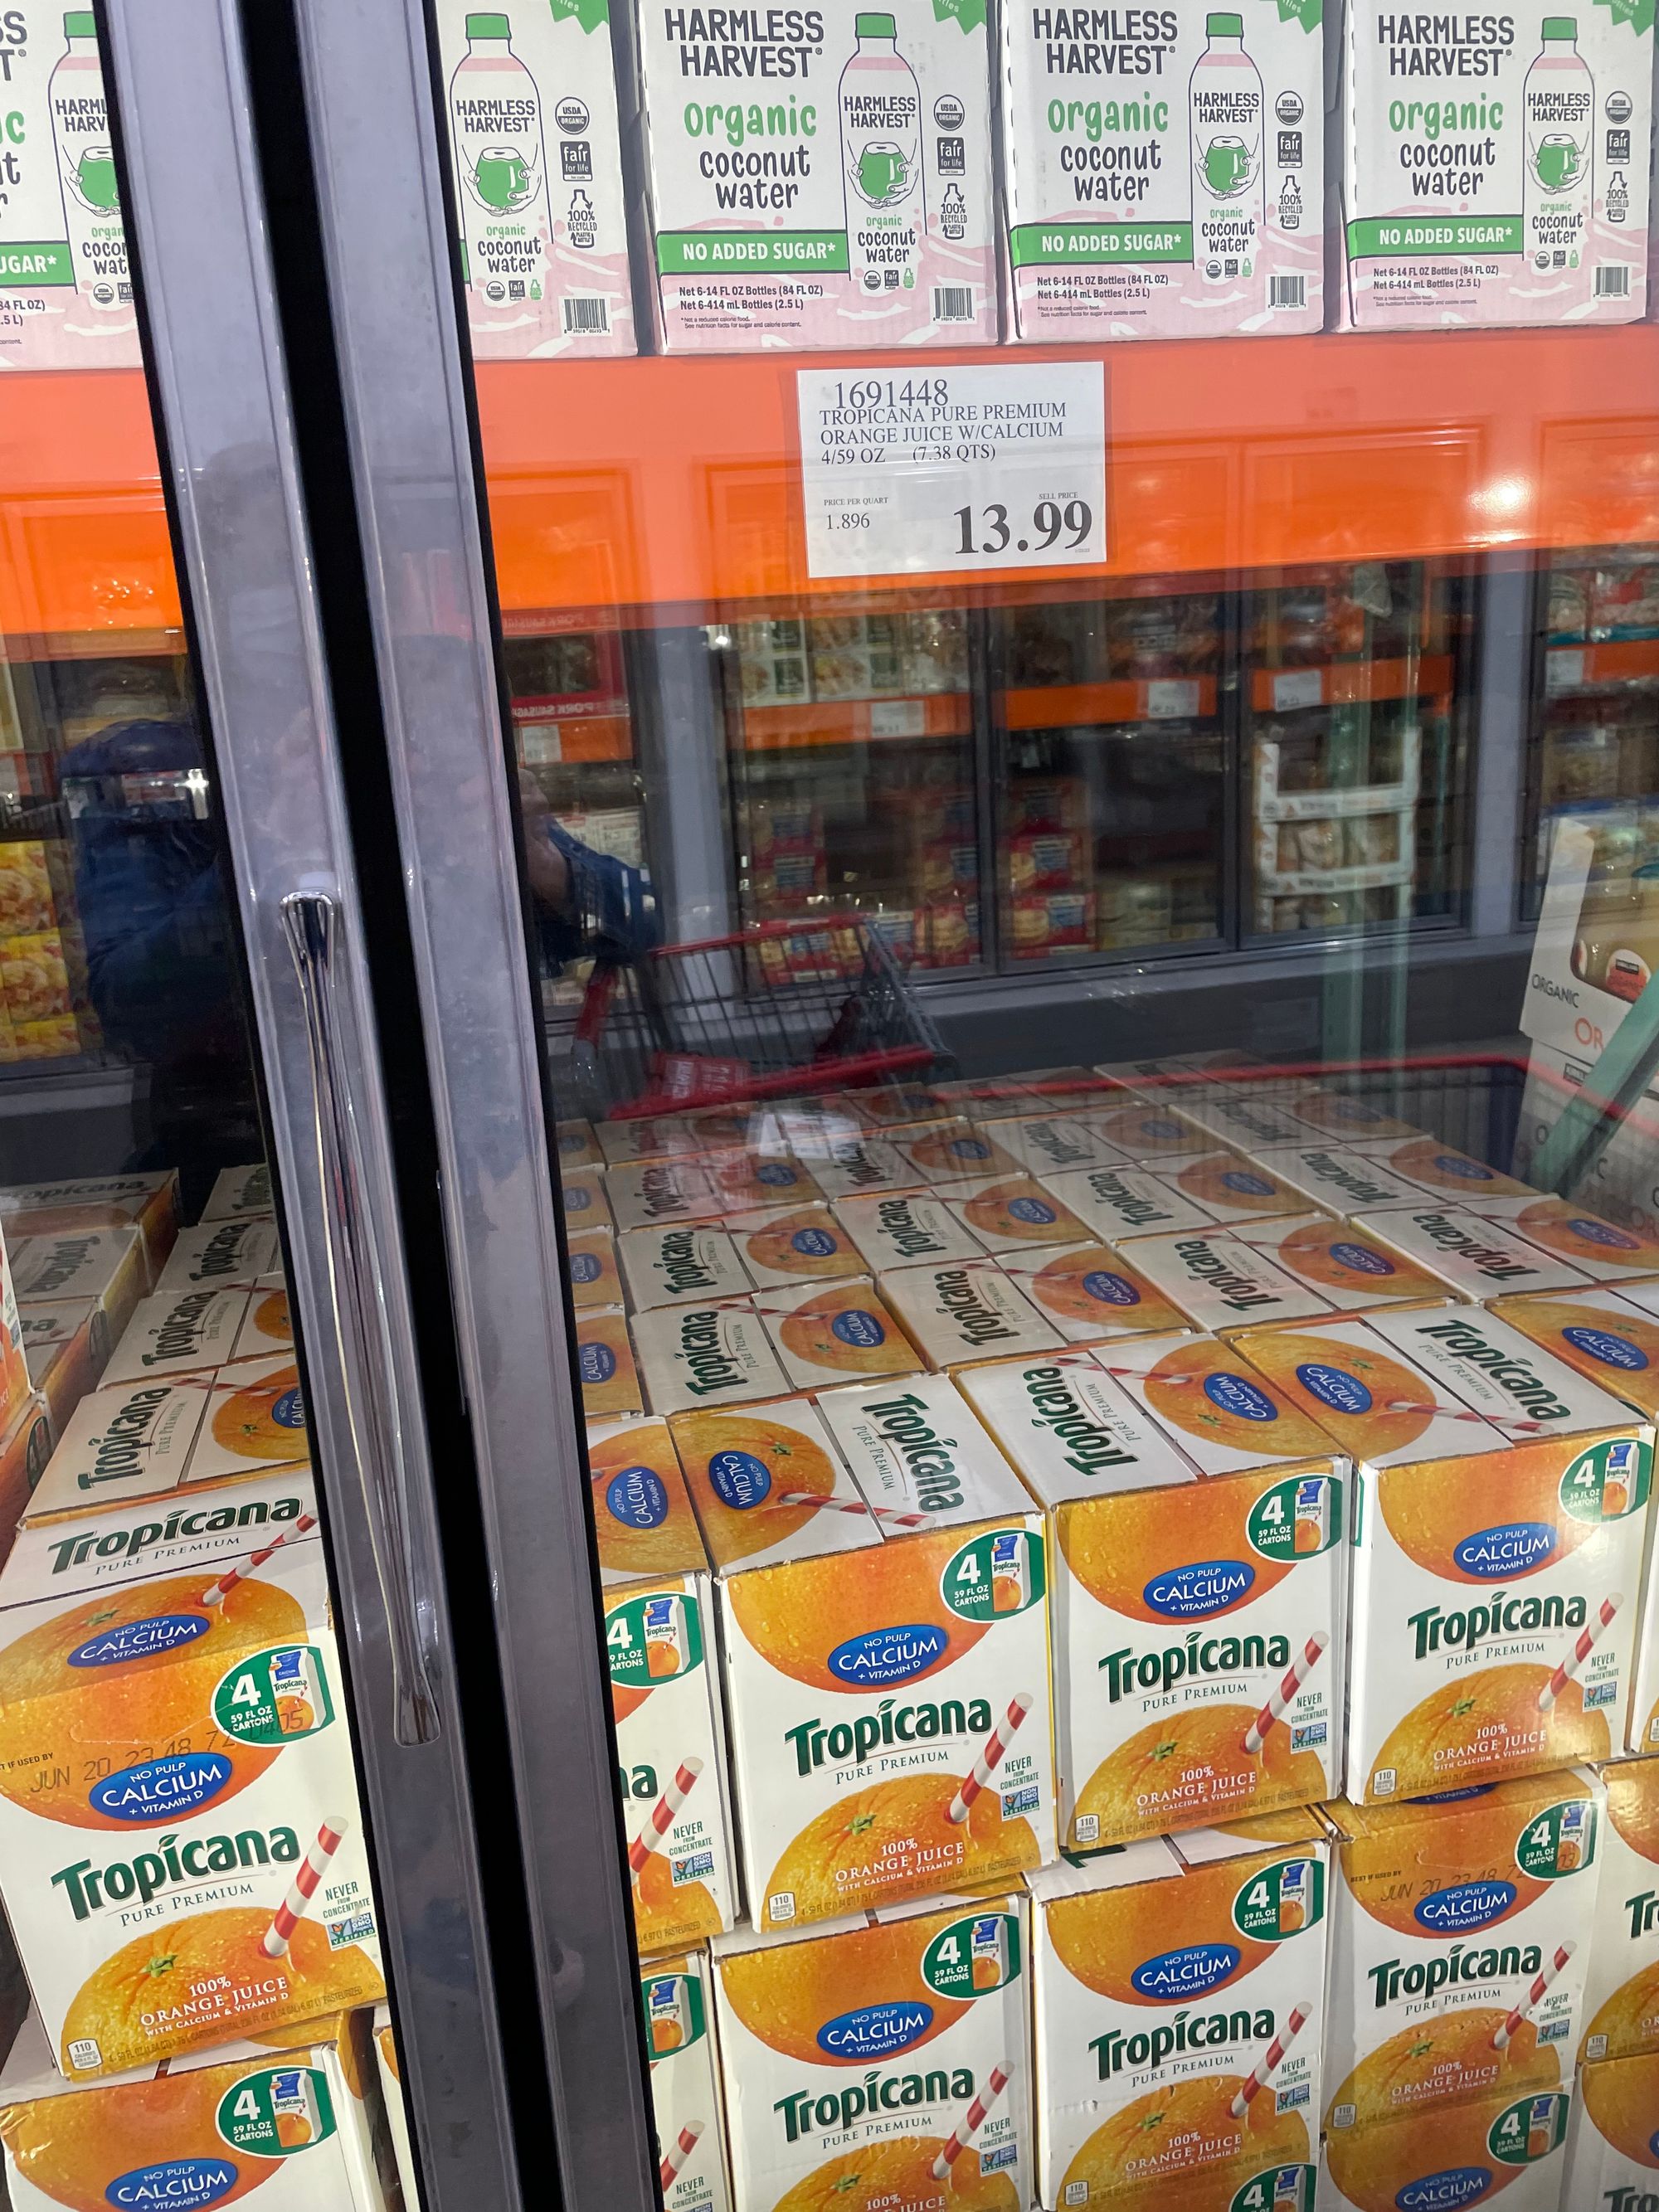 Shrinkflation Strikes Costco? The New Price and Size of Orange Juice!